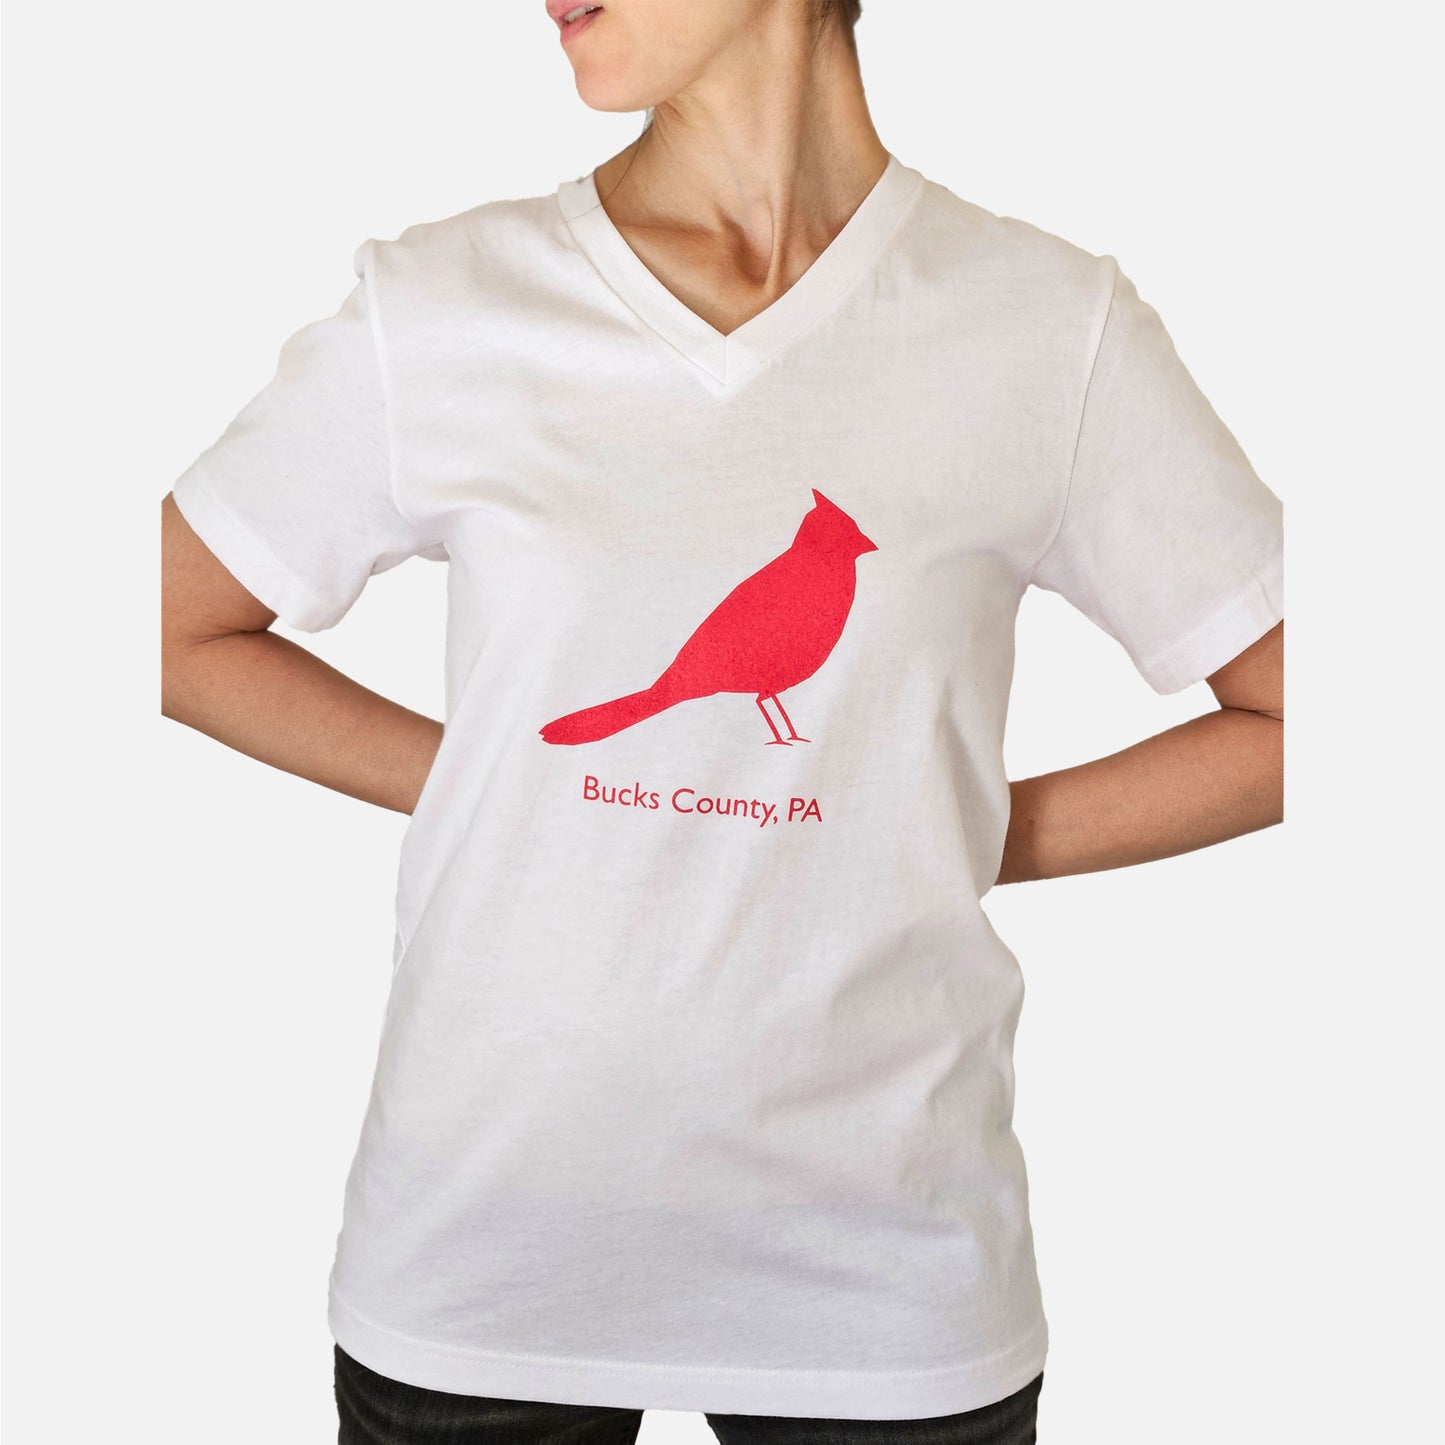 Cardinal / Bucks County graphic V-Neck T-shirt - white